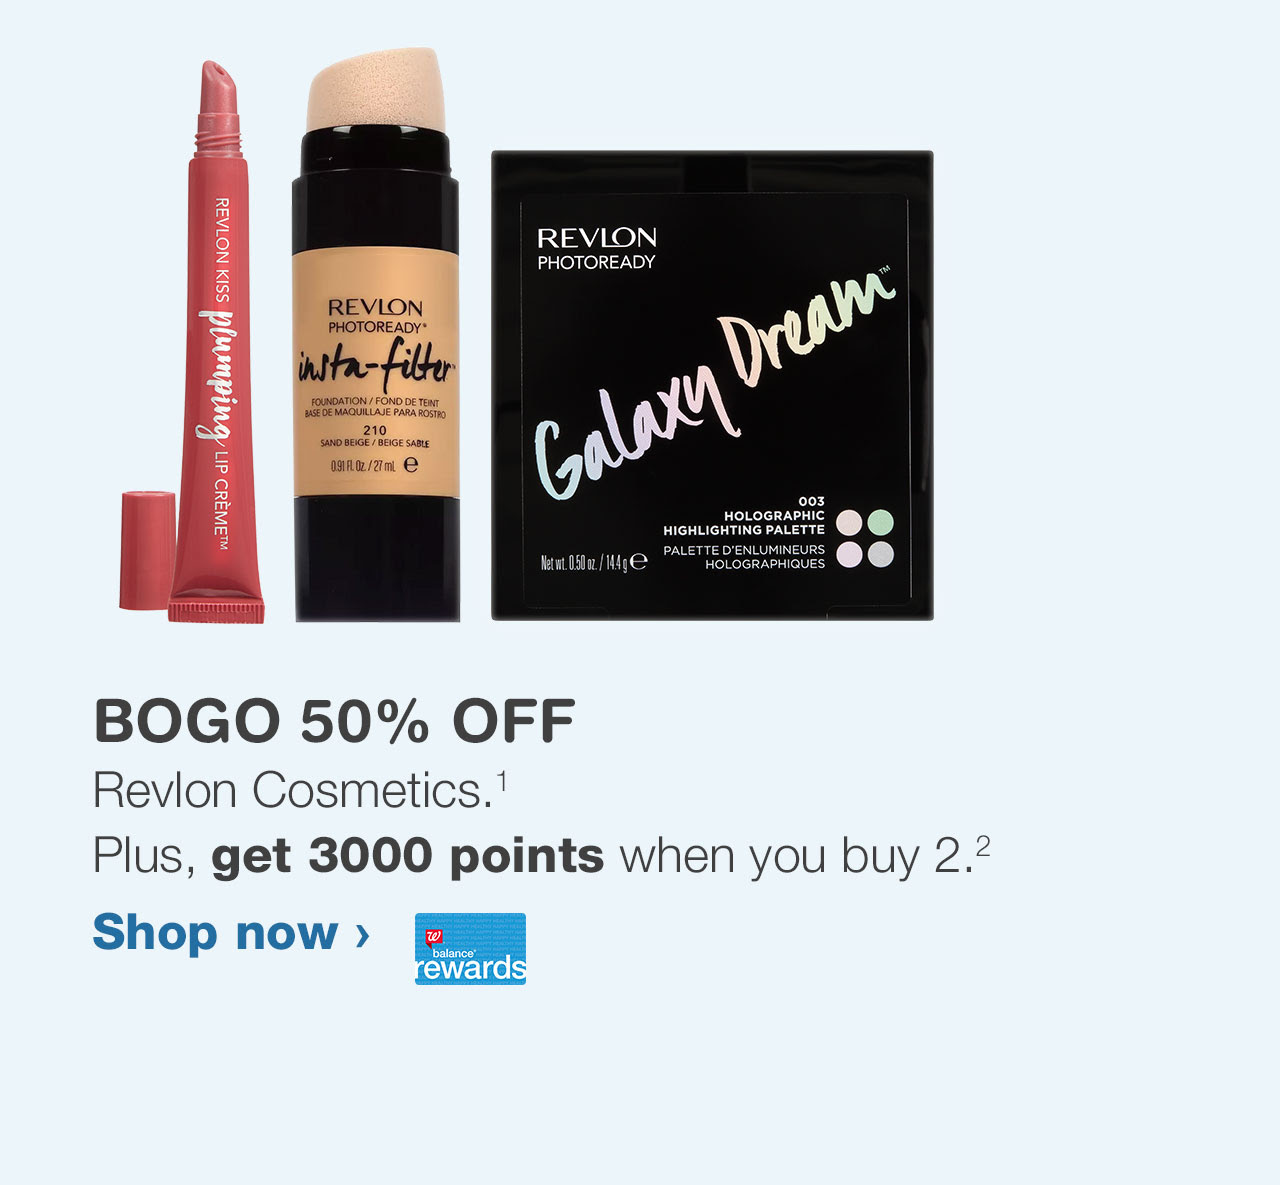 BOGO 50% OFF Revlon Cosmetics. Plus, get 3000 points when you buy 2